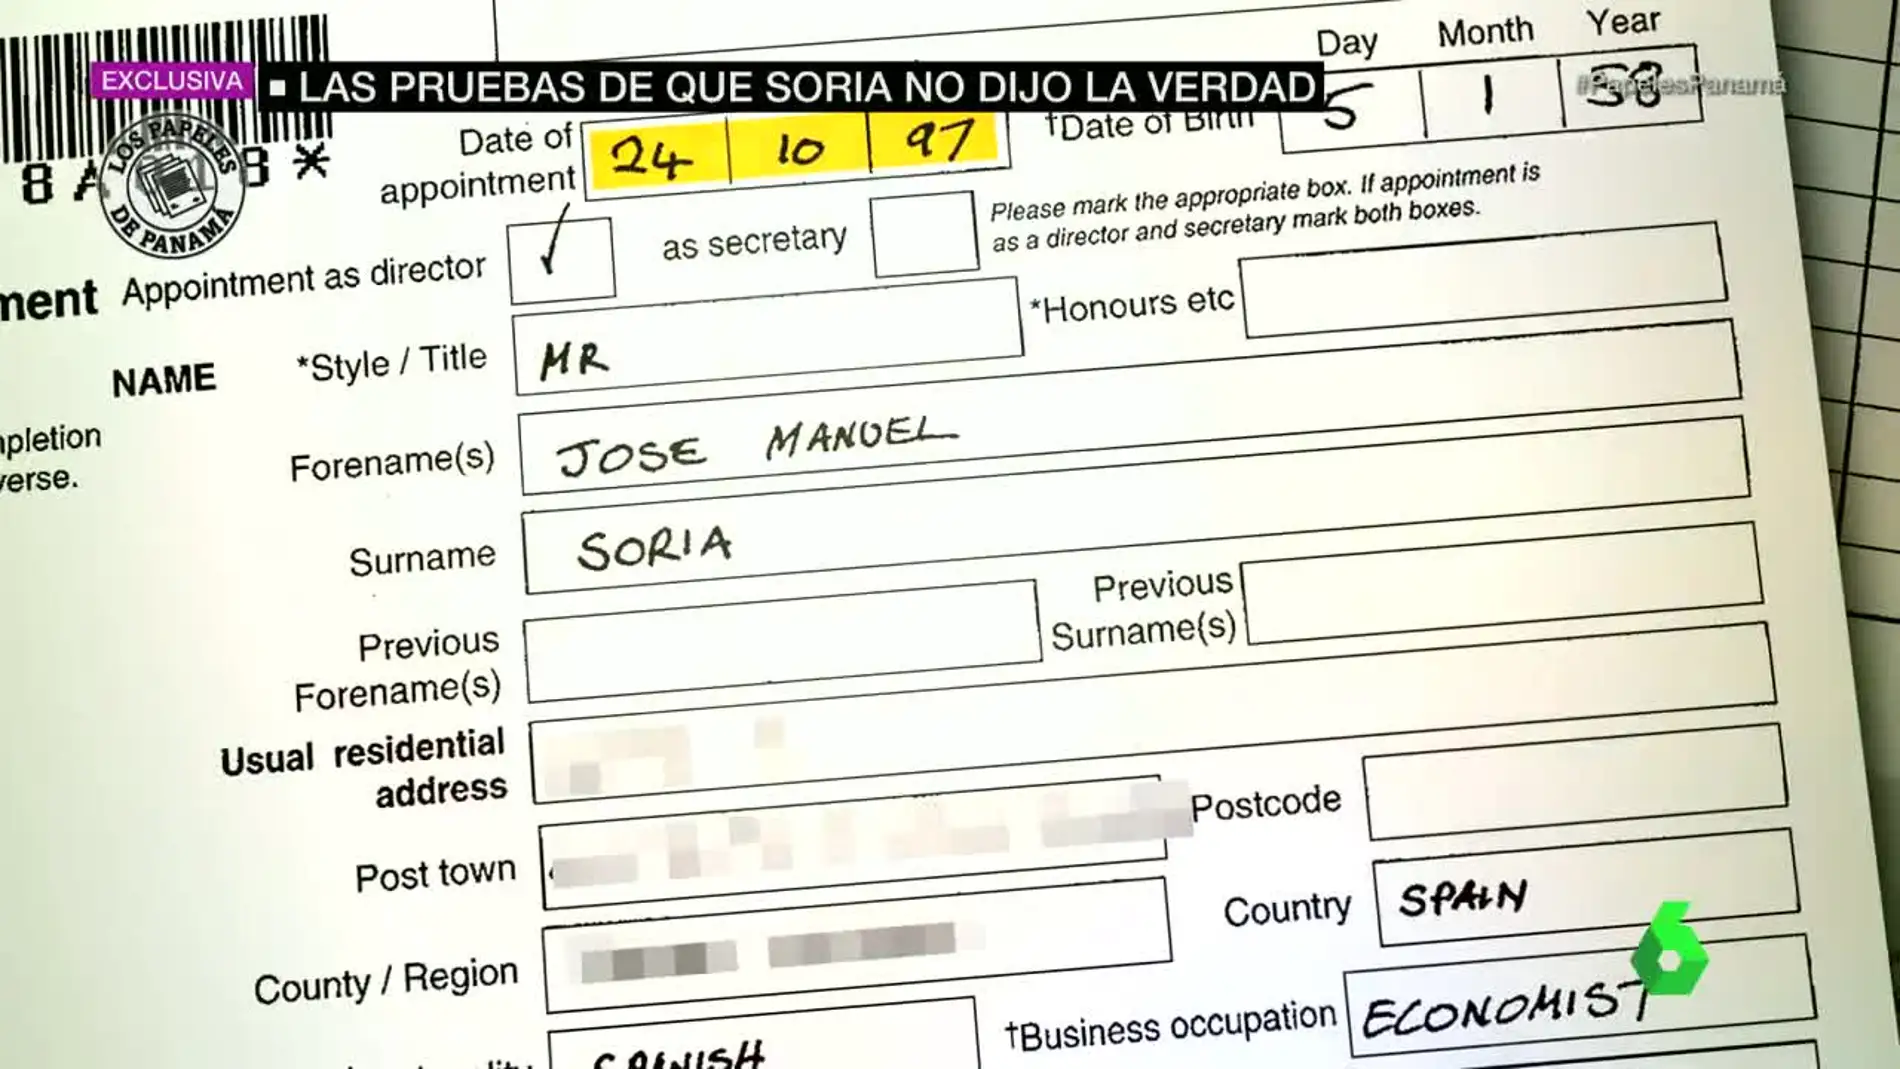 Documento de José Manuel Soria en Mossack Fonseca